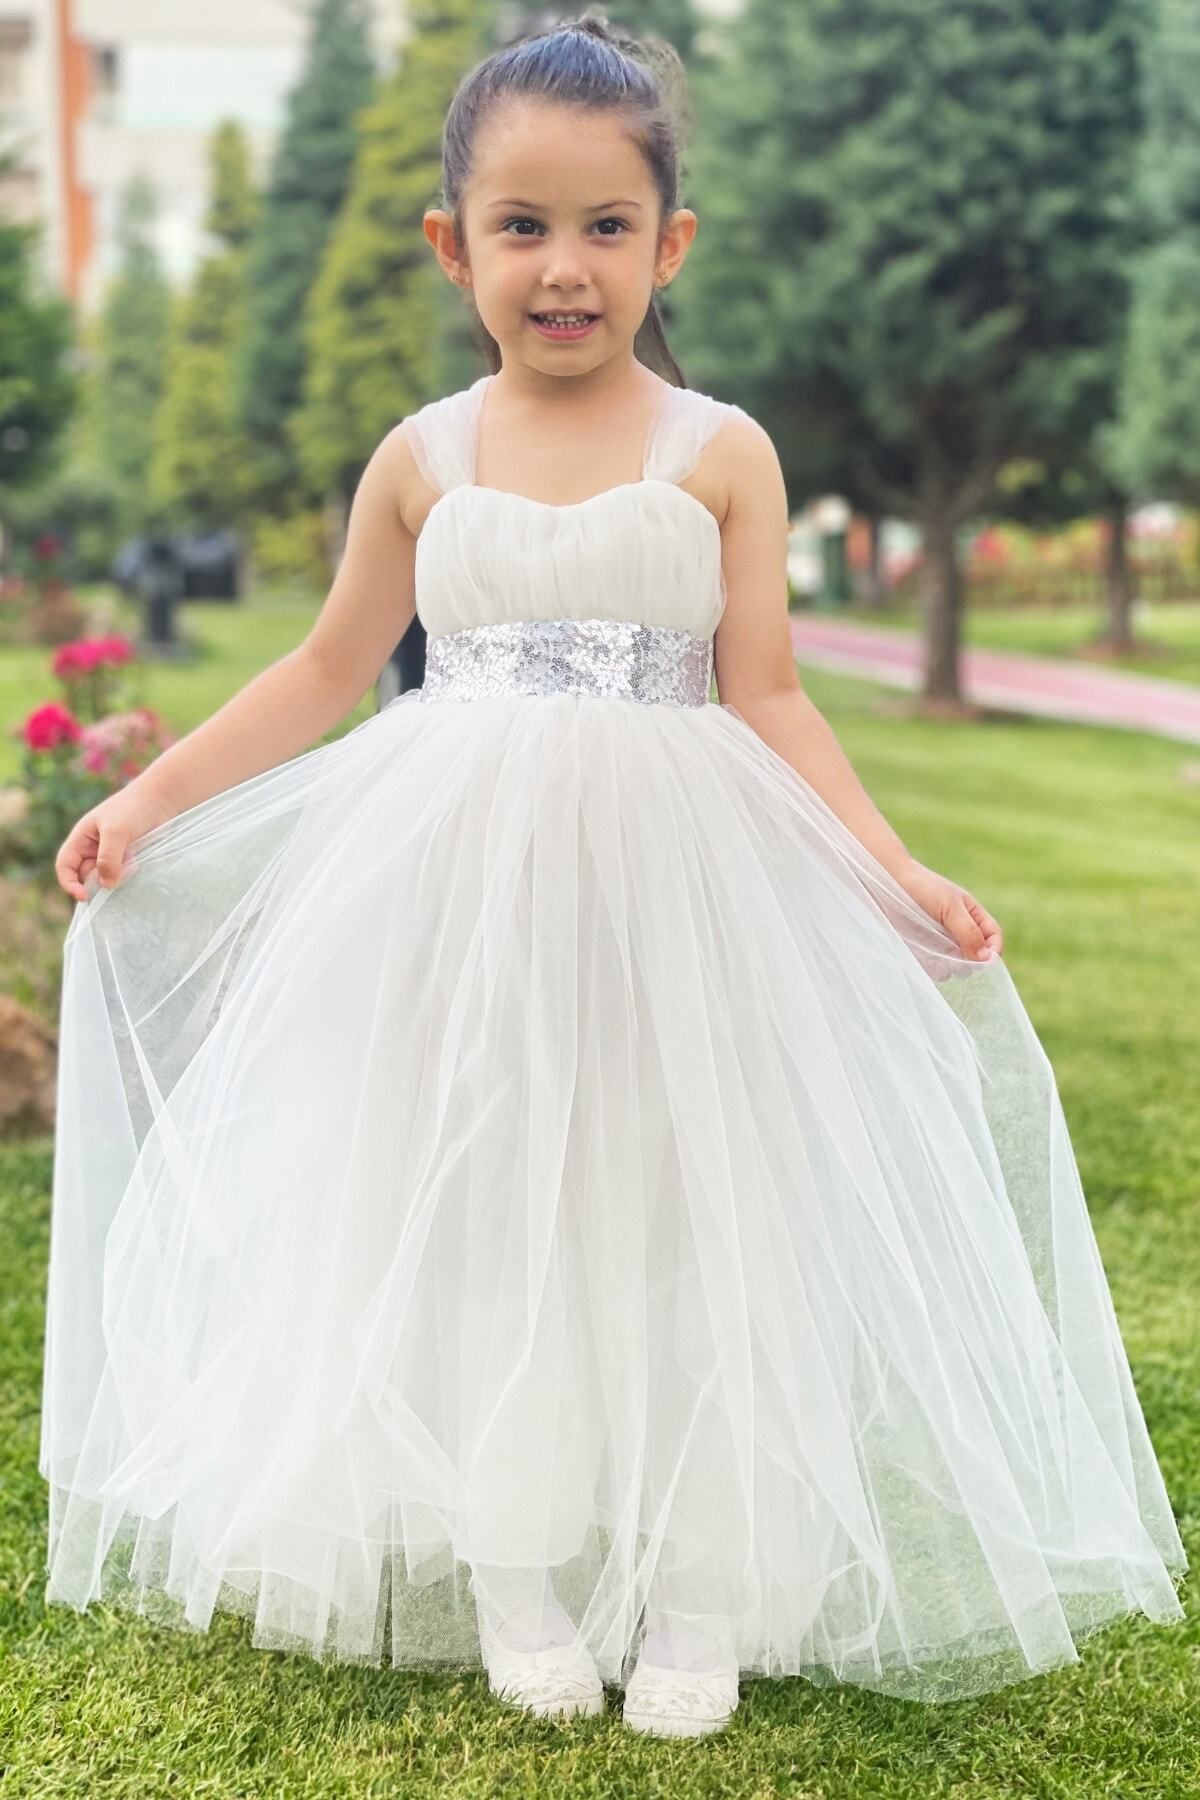 FKKFYY Buy 0-12 Years Baby Flower Girl Dress Wedding at Ubuy India